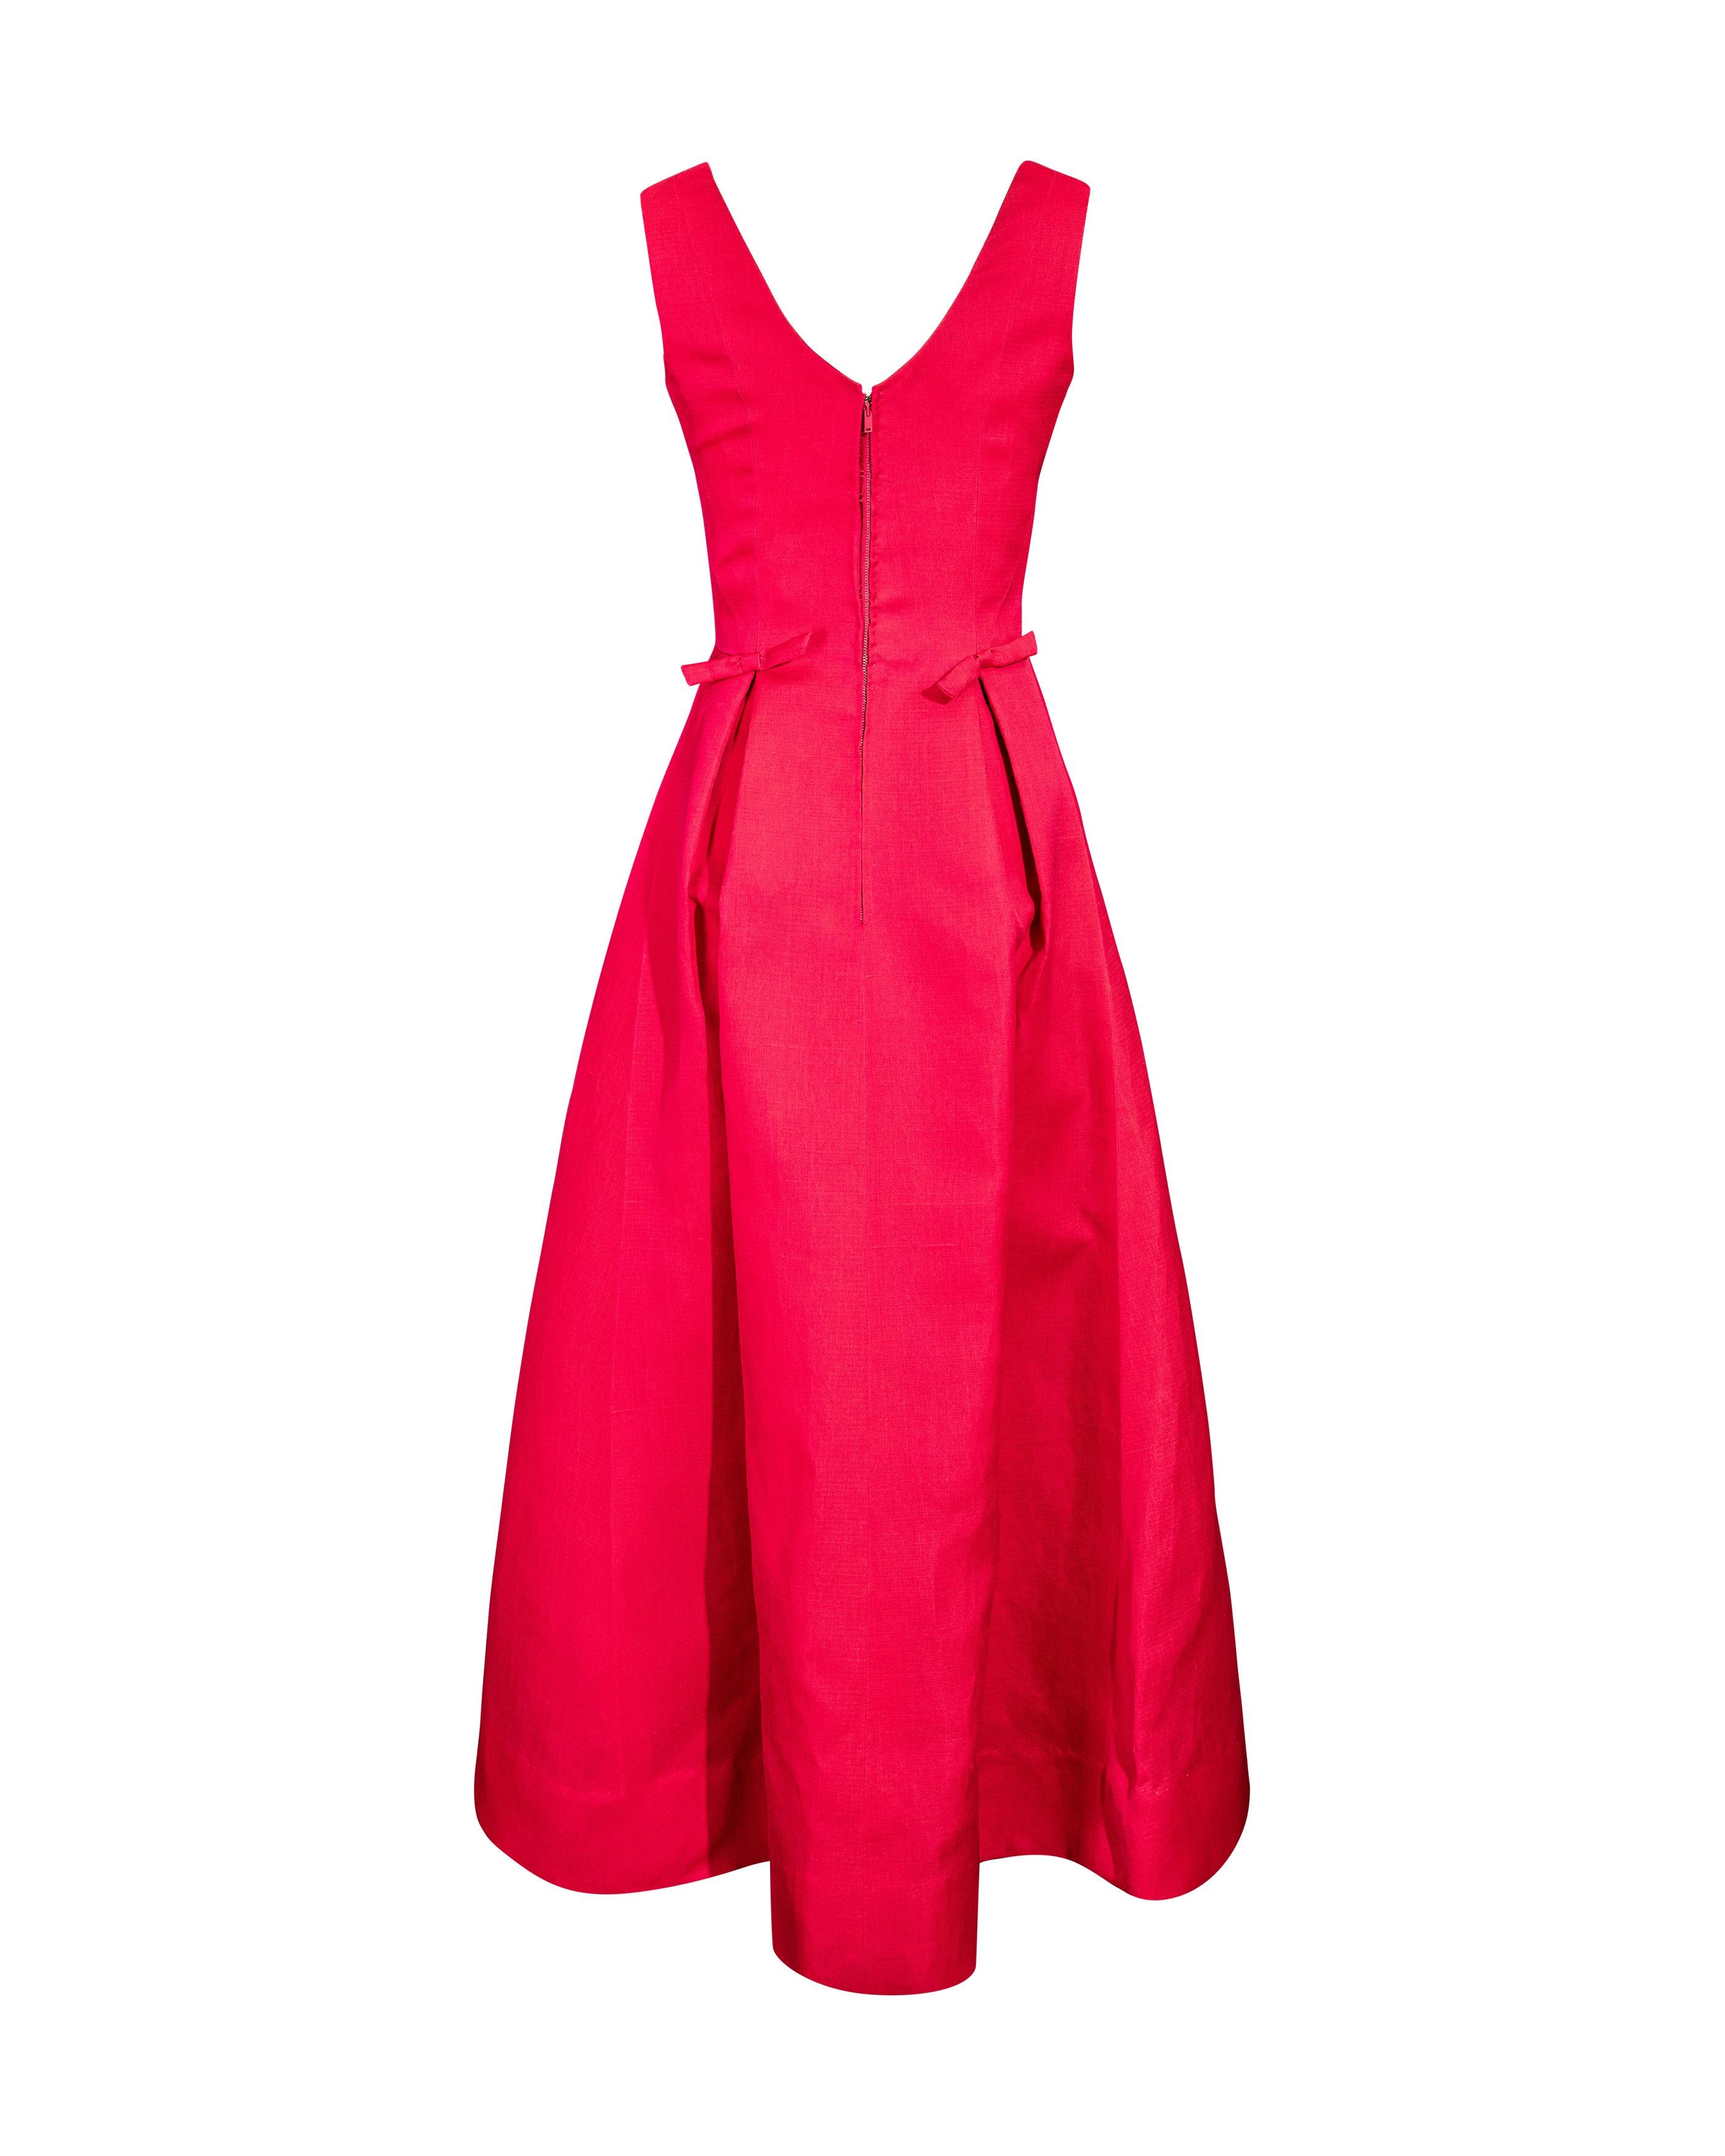 S/S 1964 Balenciaga Deep Rose Pink Silk Sleeveless Gown 1